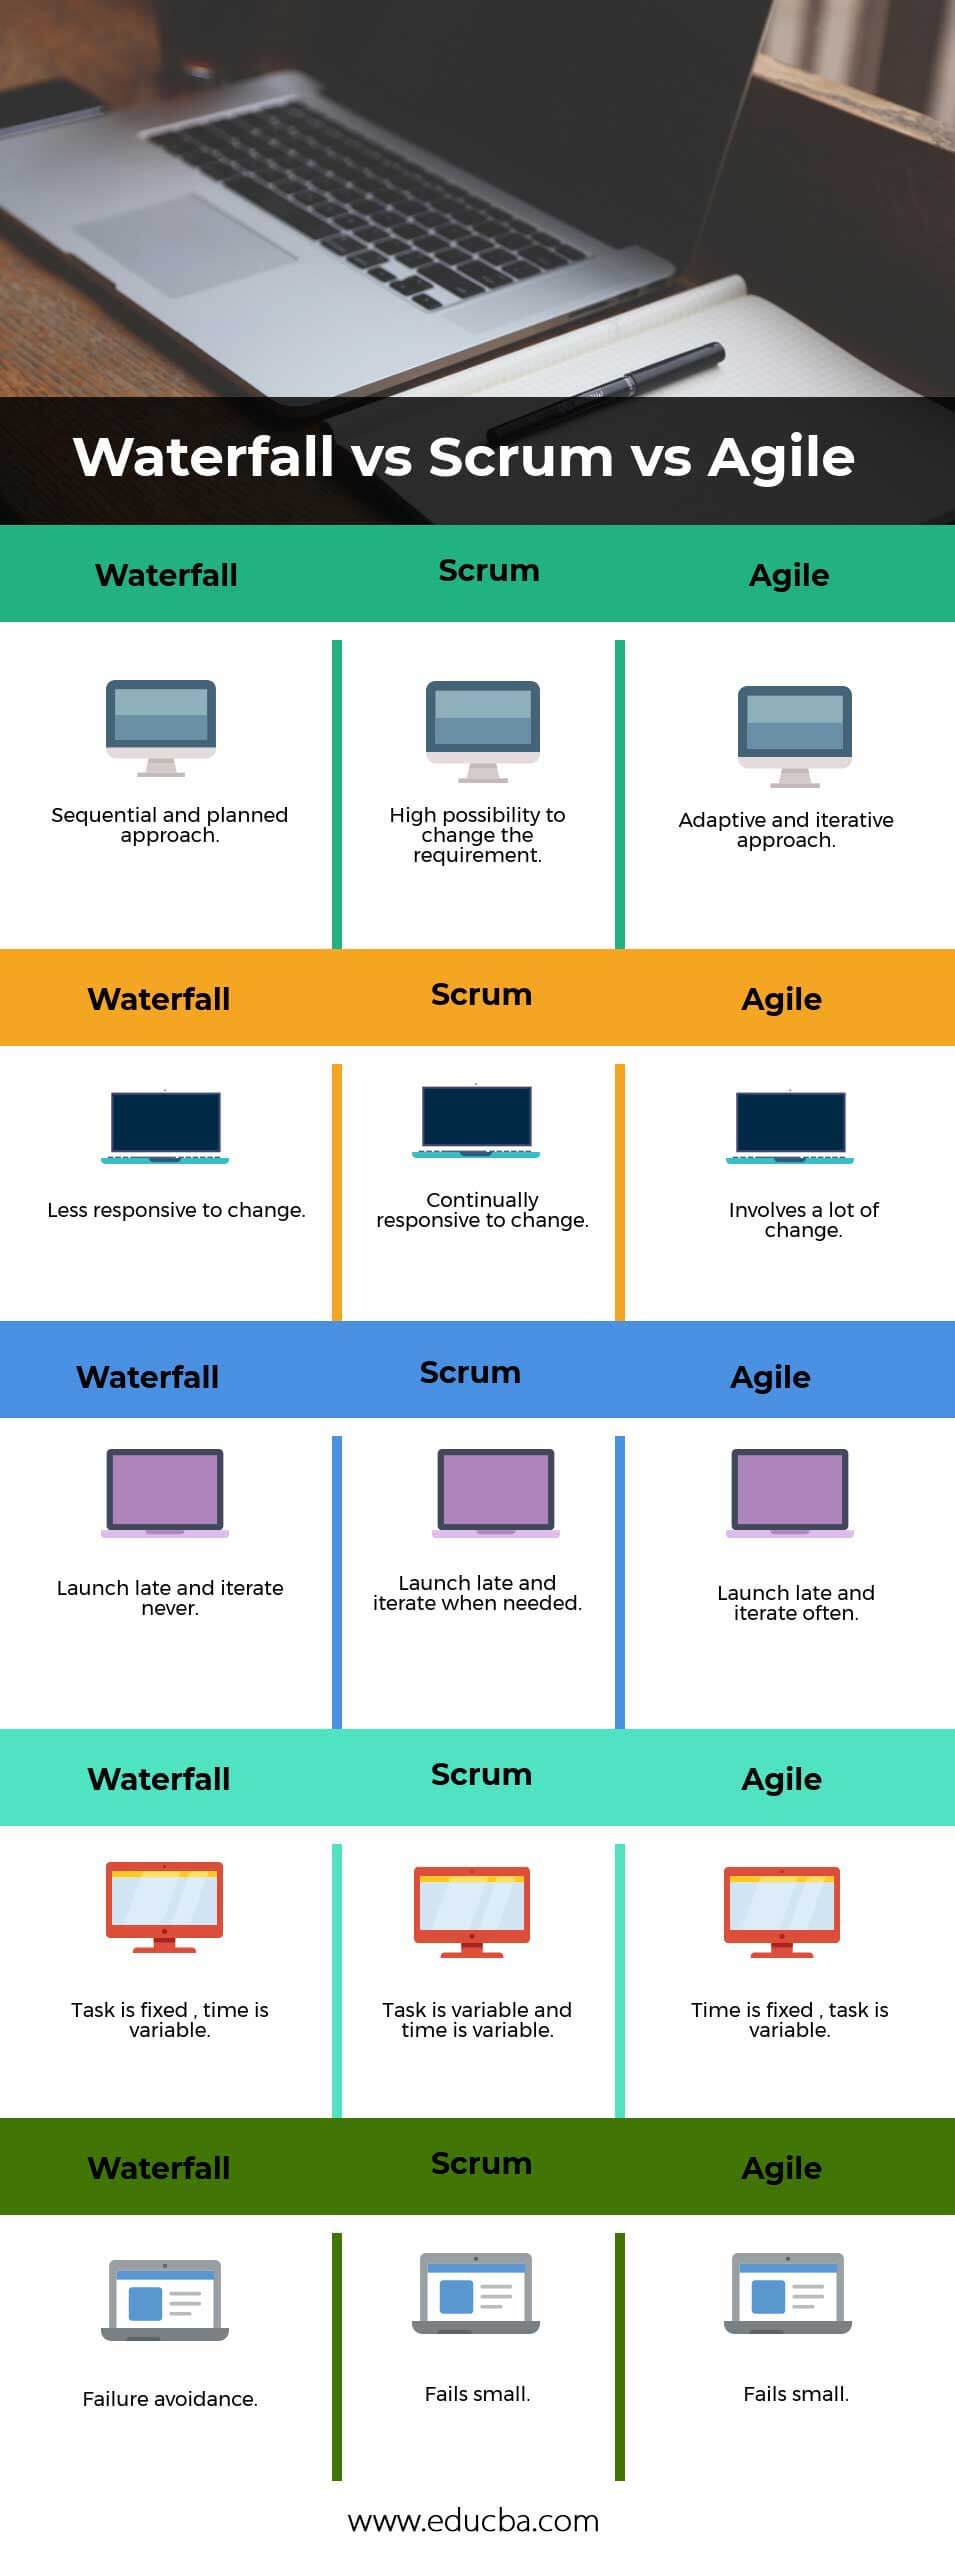 Waterfall-vs-Scrum-vs-Agile-info.jpg